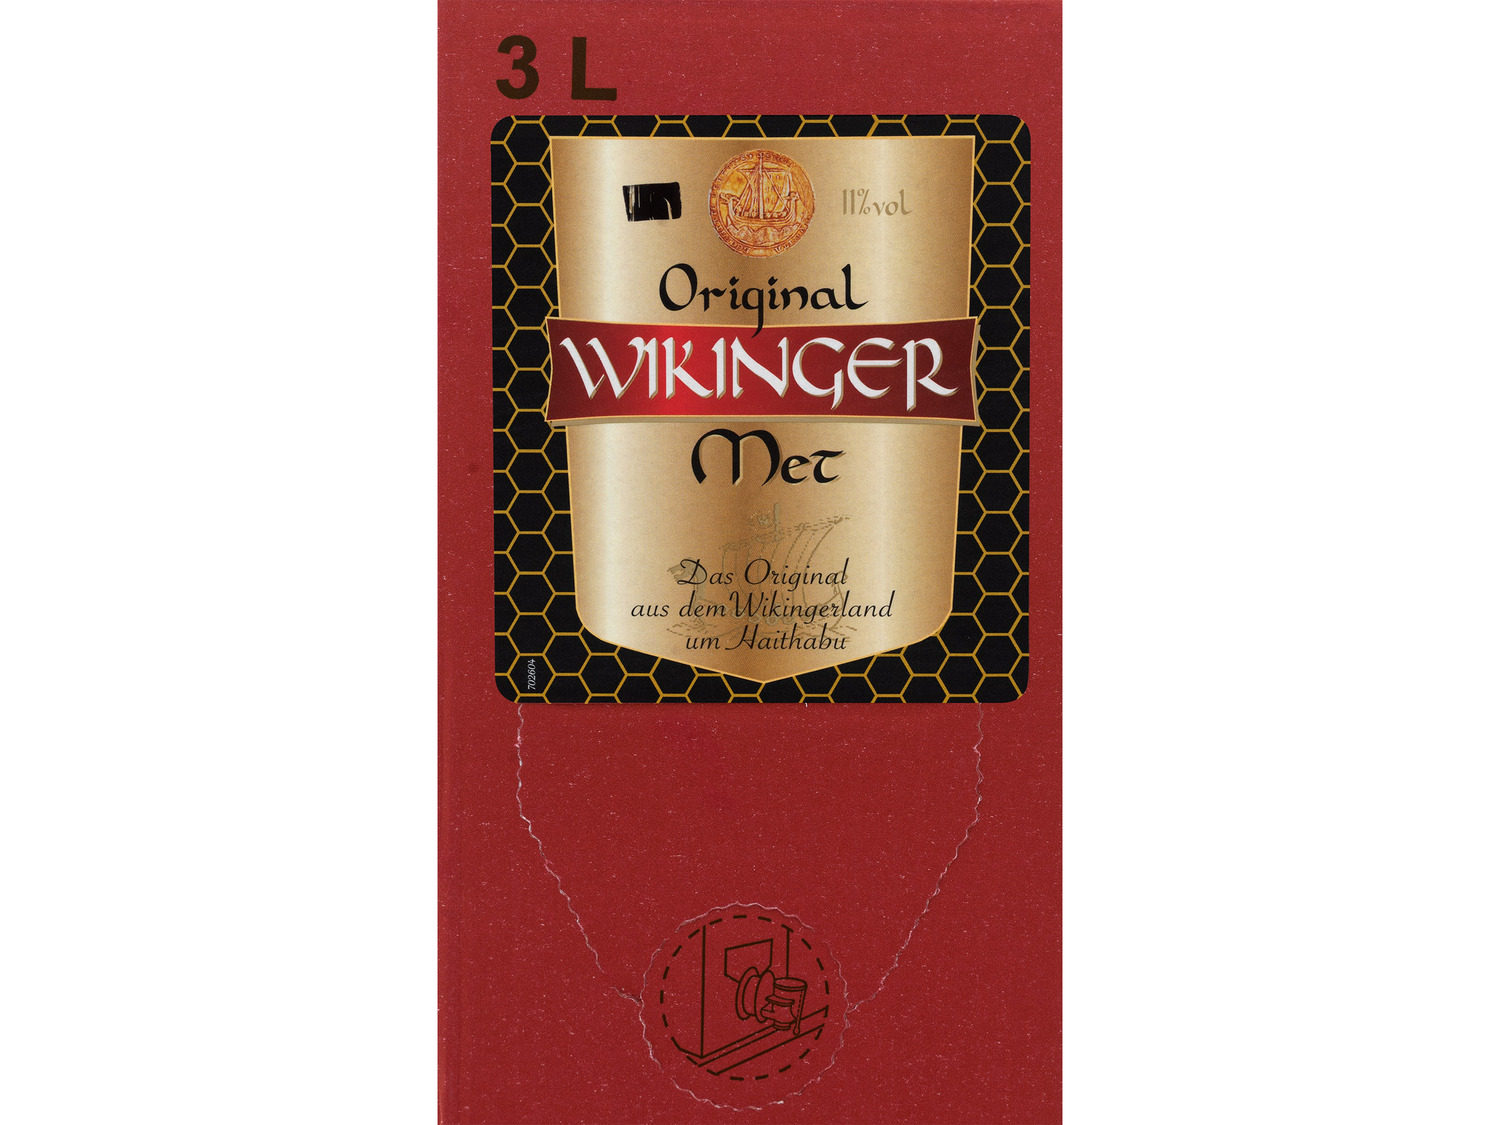 Wikinger Met 11% Vol Honigwein LIDL 3,0-l-Bag-in-Box, 